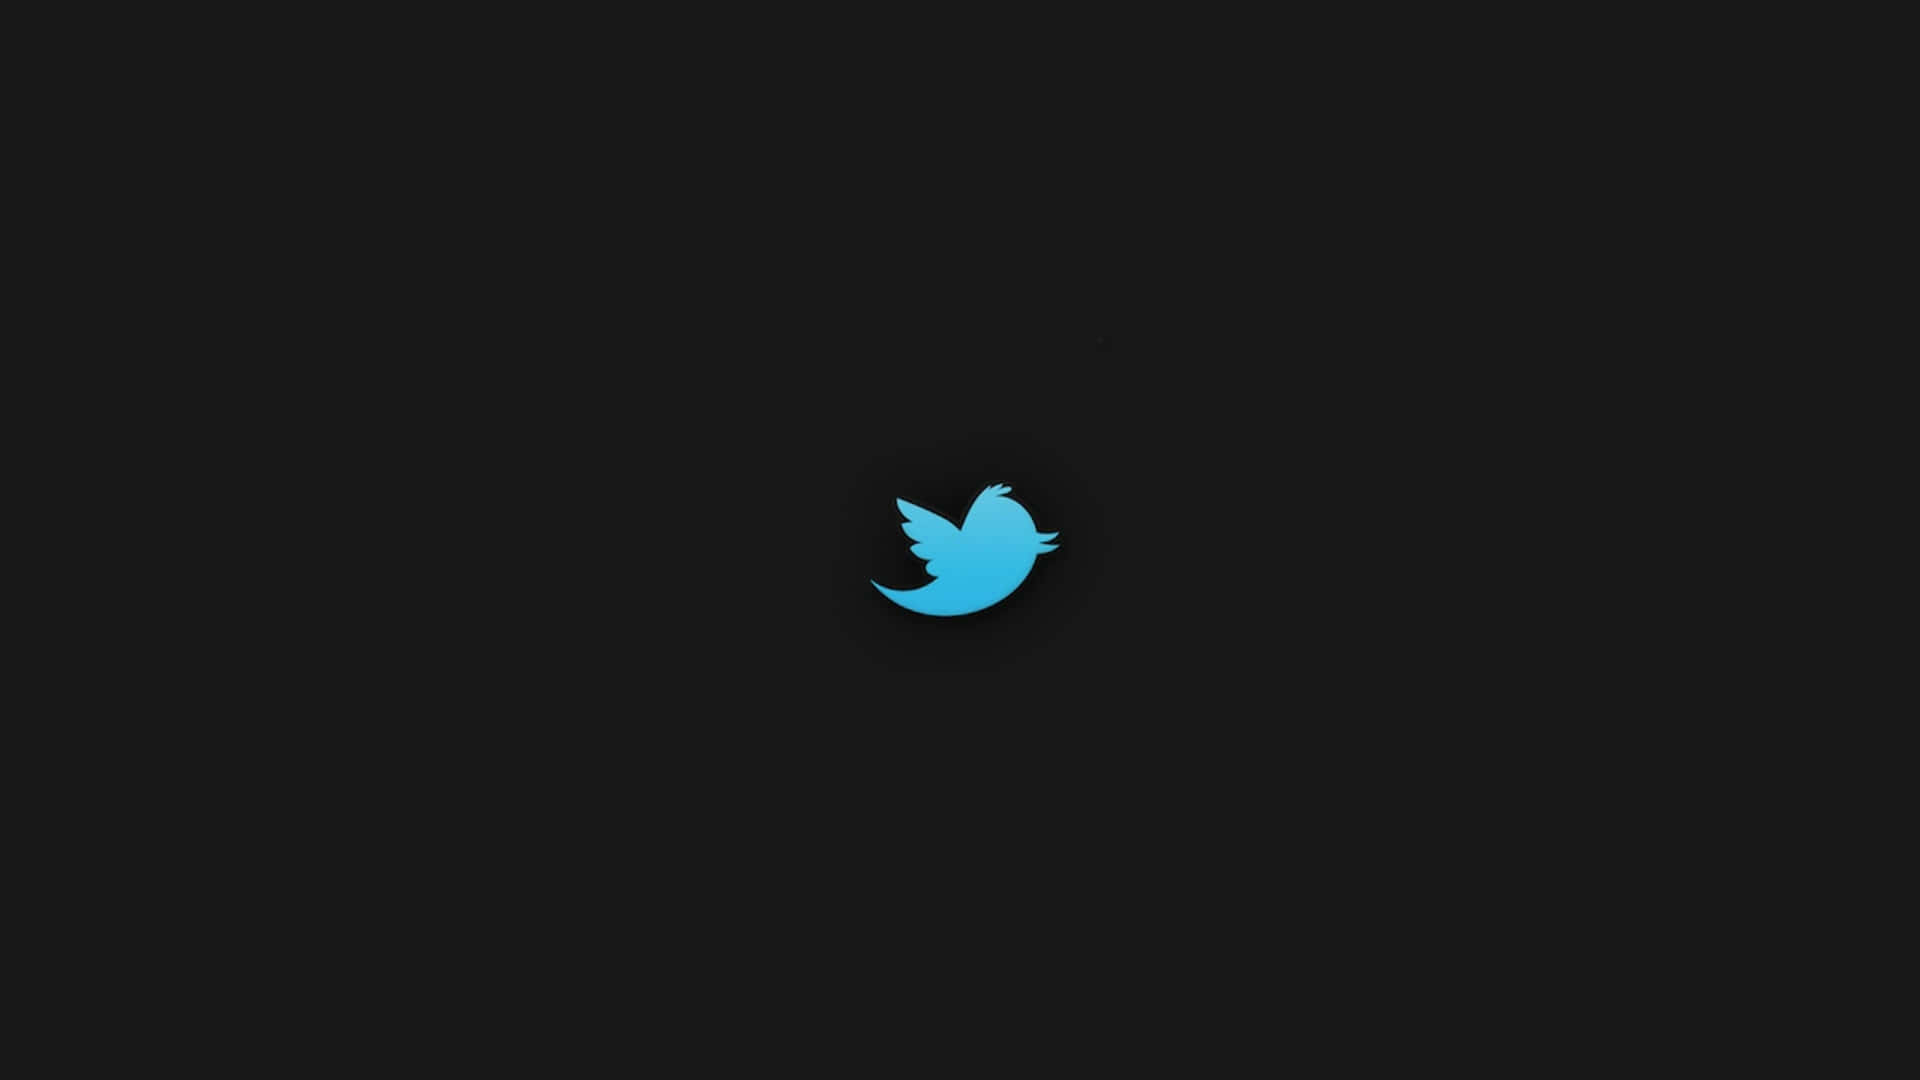 1920x1080 Sociale baggrund Twitter logo Sort baggrund